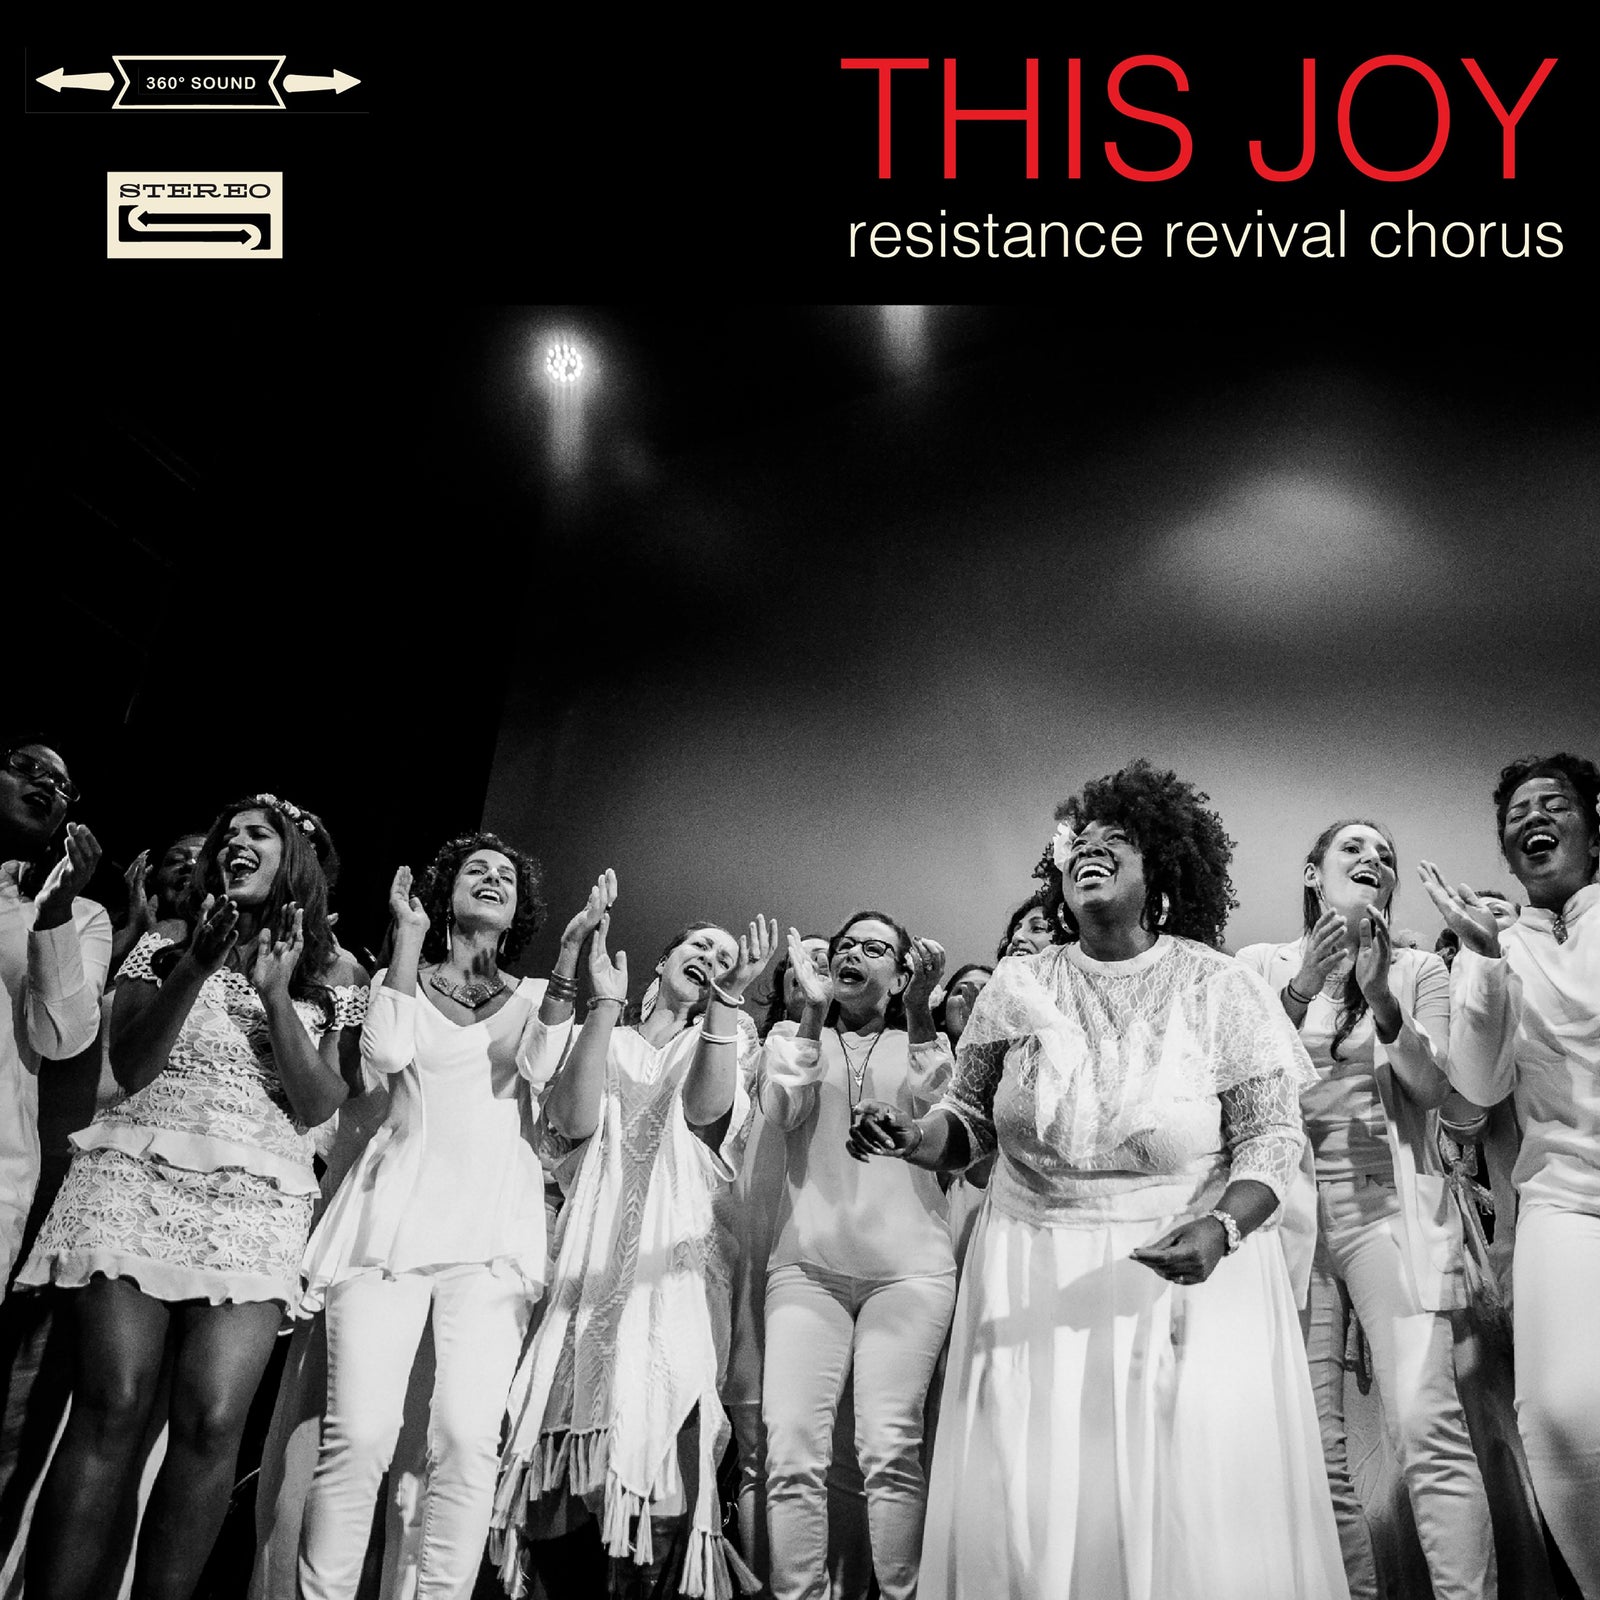 Resistance Revival Chorus - This Joy (Vinyl)